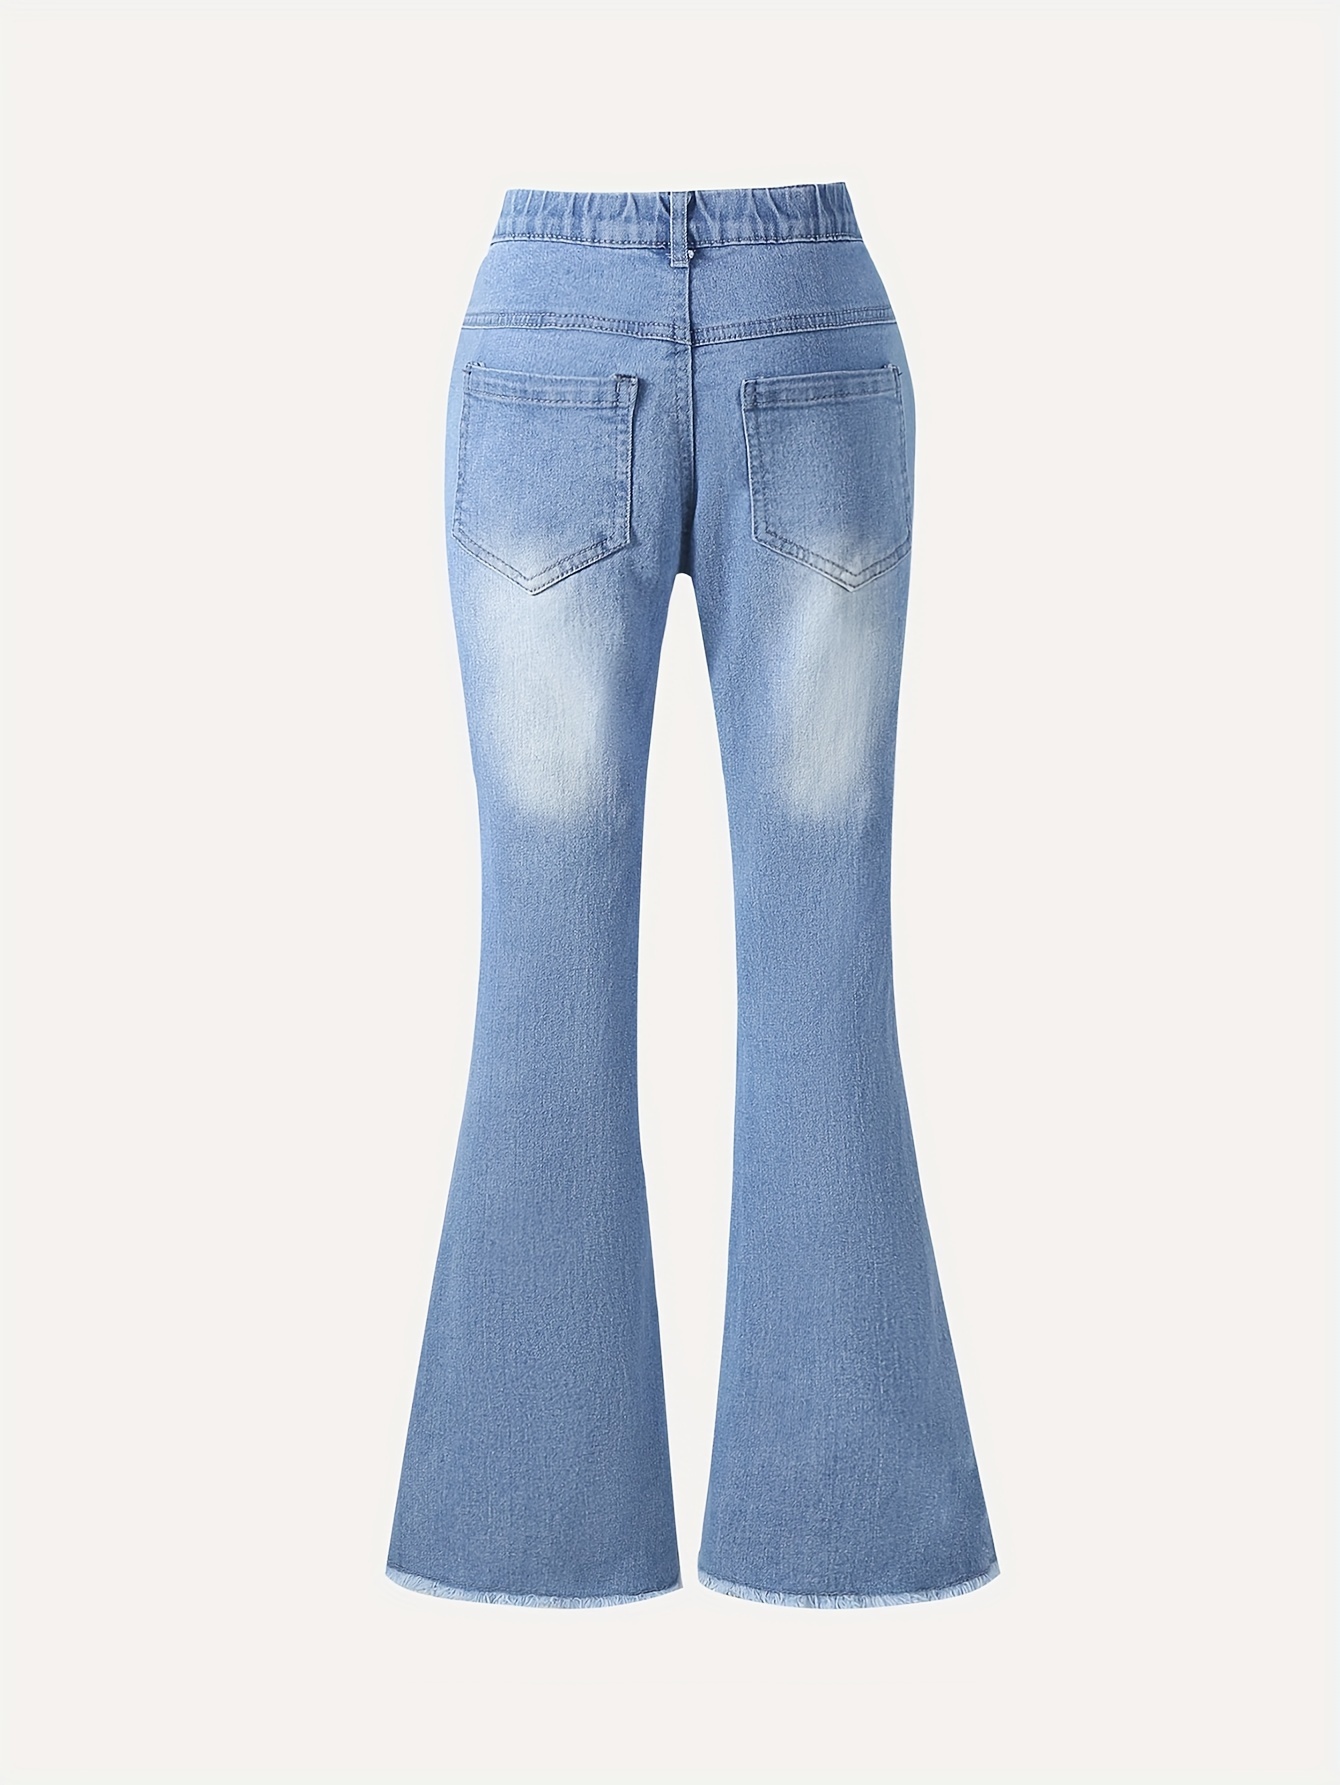 Girls Denim Flare Jeans